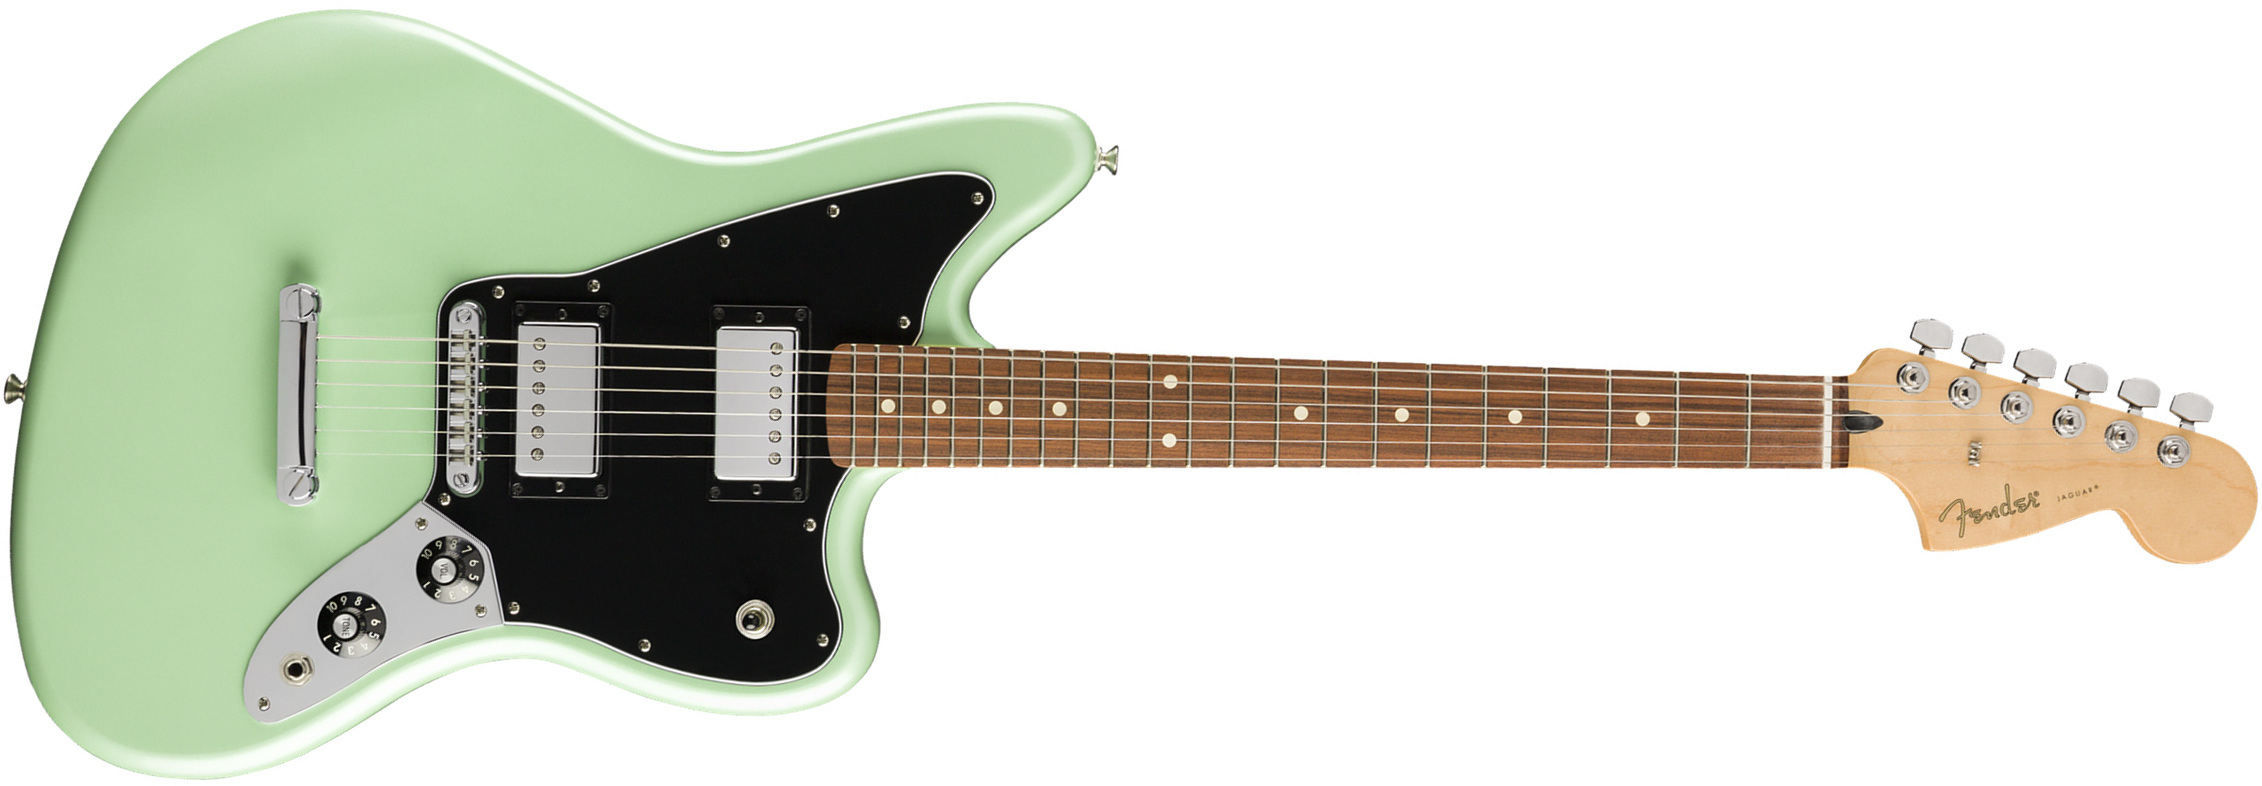 Fender Jaguar Hh Special Edition Player Fsr Mex 2h Ht Pf - Surf Pearl - Retro rock electric guitar - Main picture